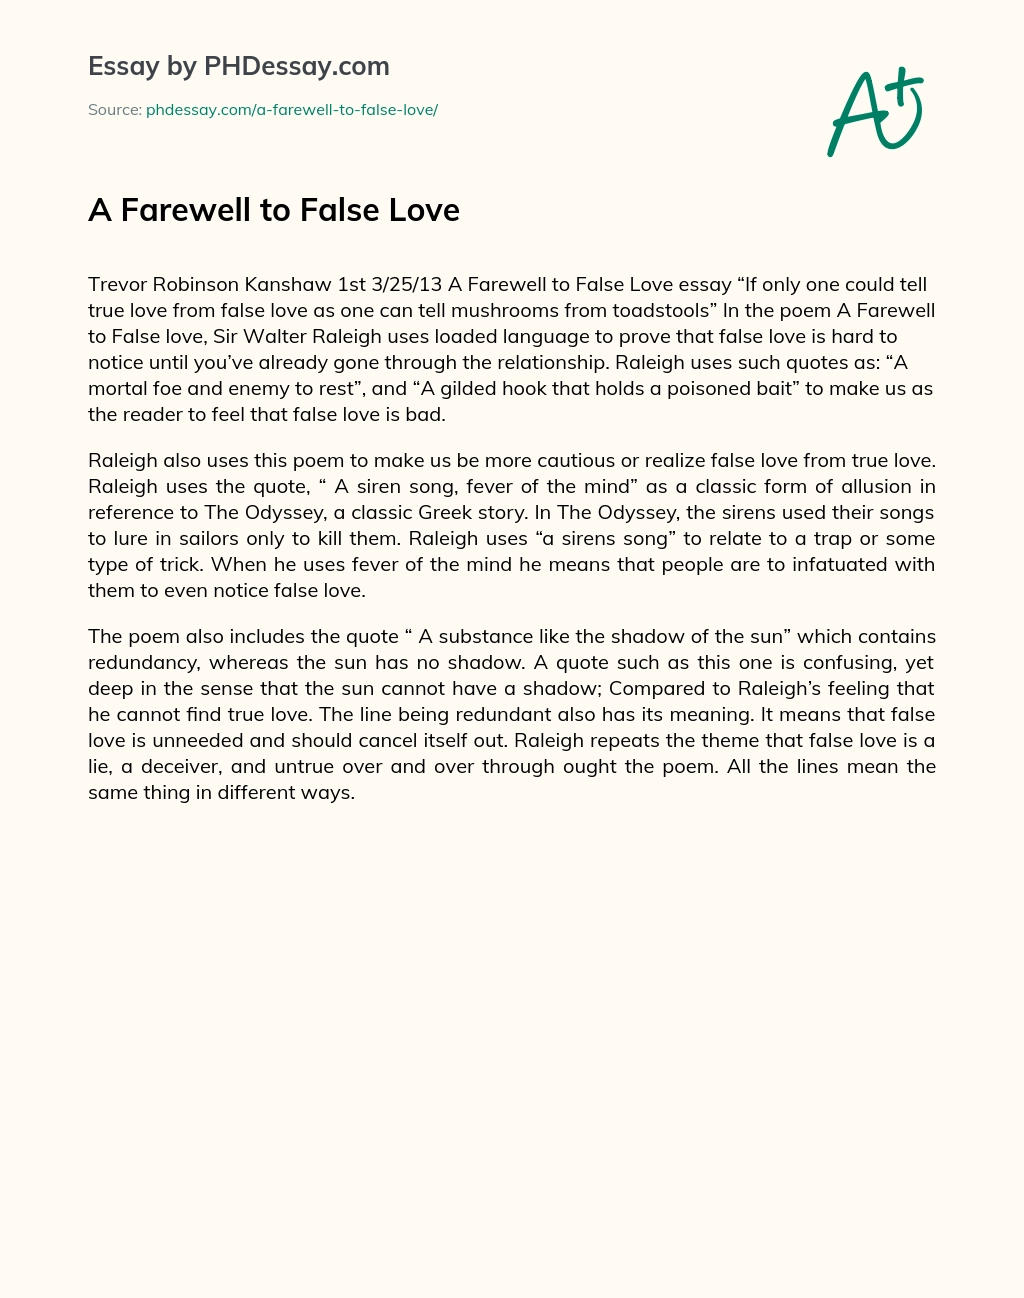 A Farewell to False Love essay